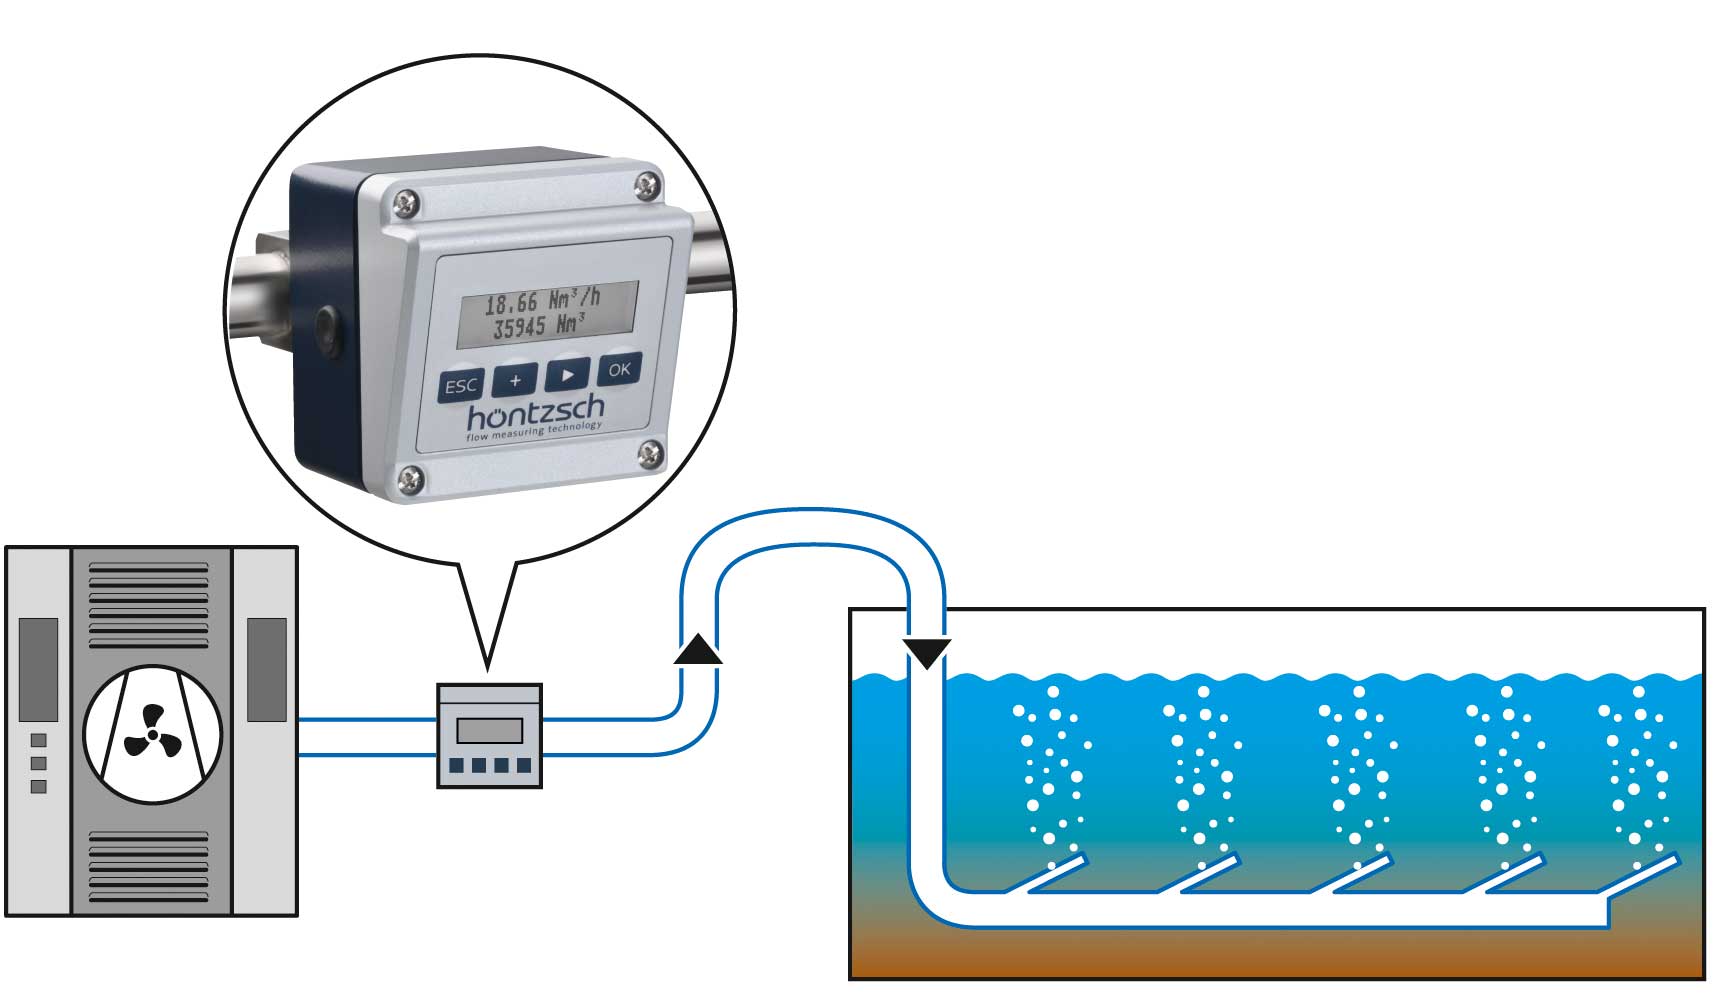 measuring sludgebaeration in sewage plants, hoentzsch thermal flow sensor